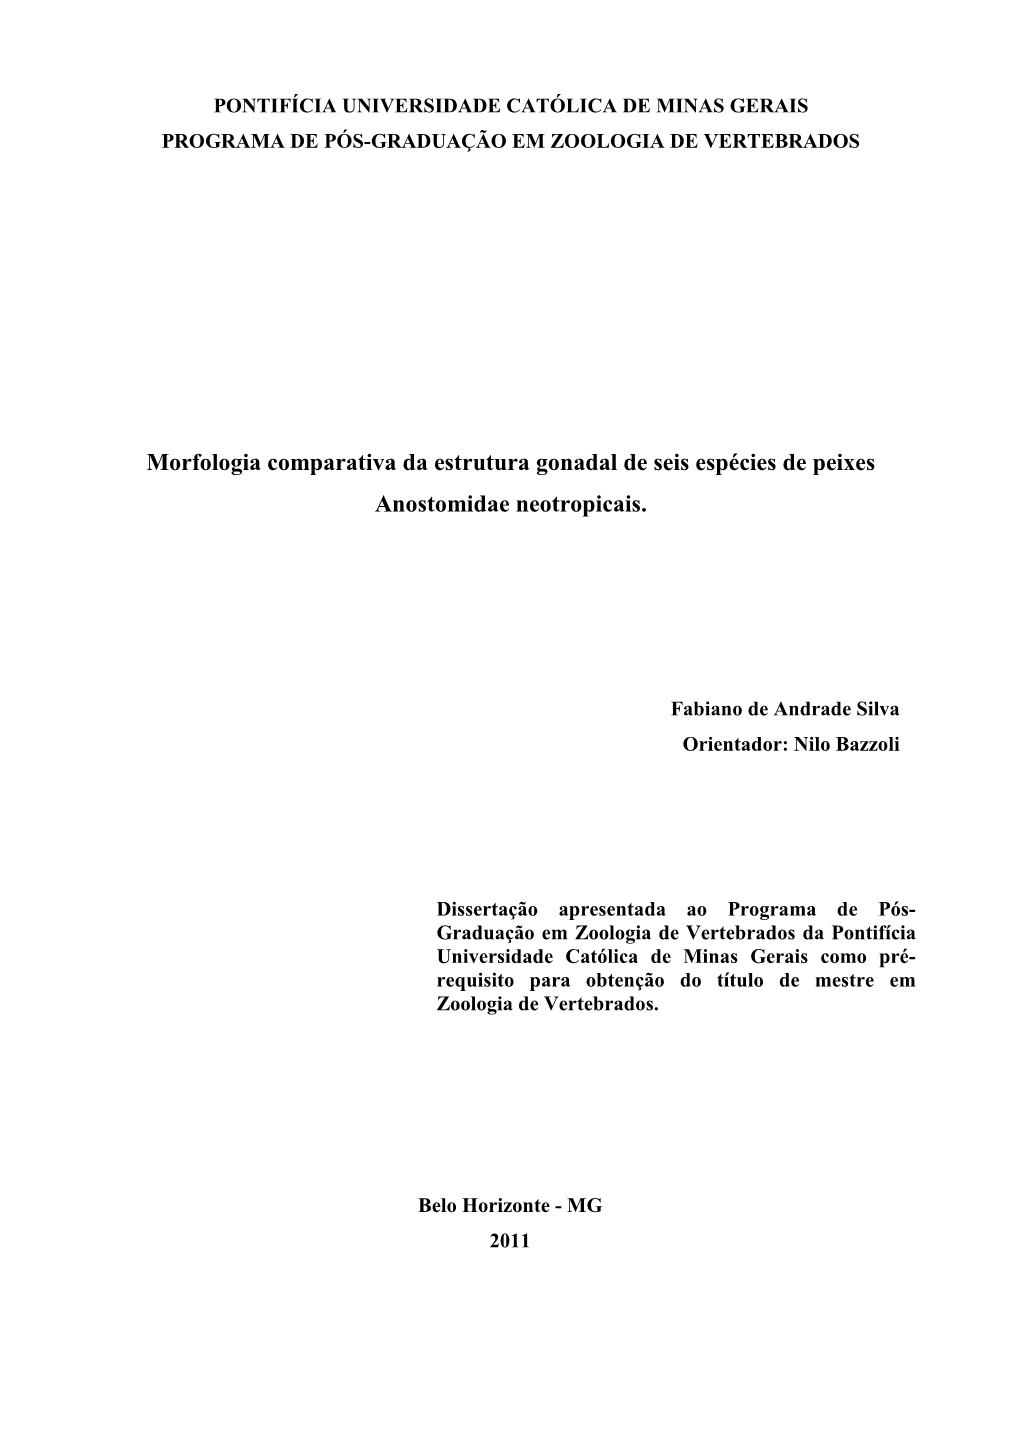 Morfologia Comparativa Da Estrutura Gonadal De Seis Espécies De Peixes Anostomidae Neotropicais